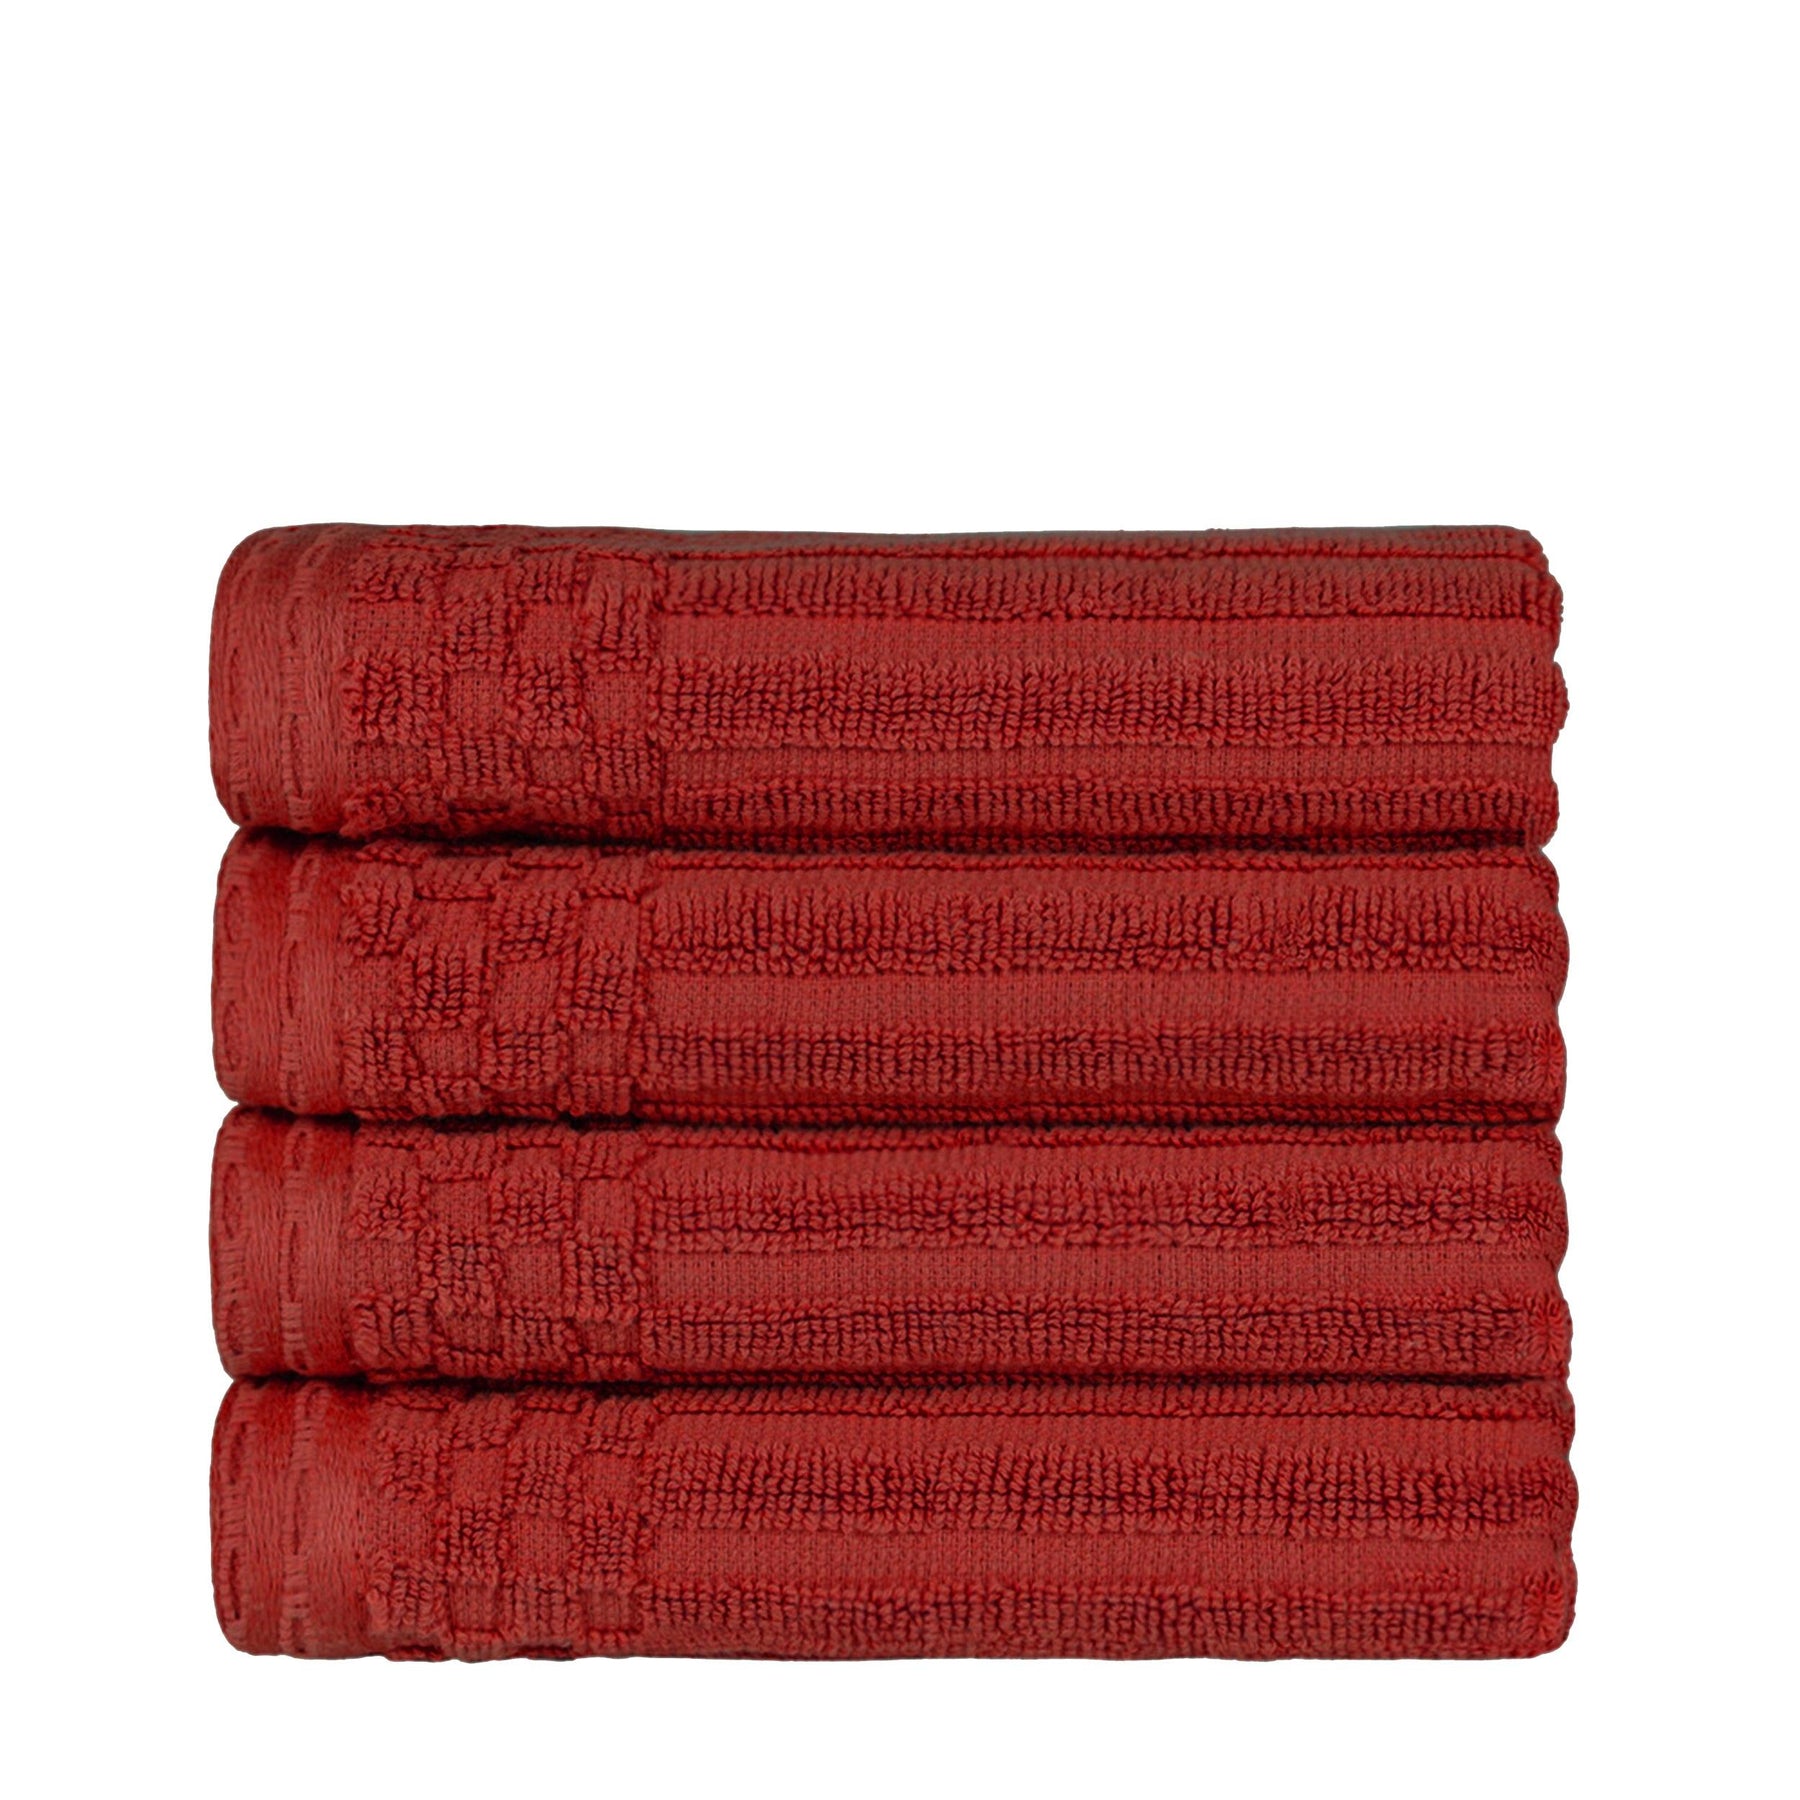 Ribbed Textured Cotton Ultra-Absorbent 4 Piece Hand Towel Set - Burgundy